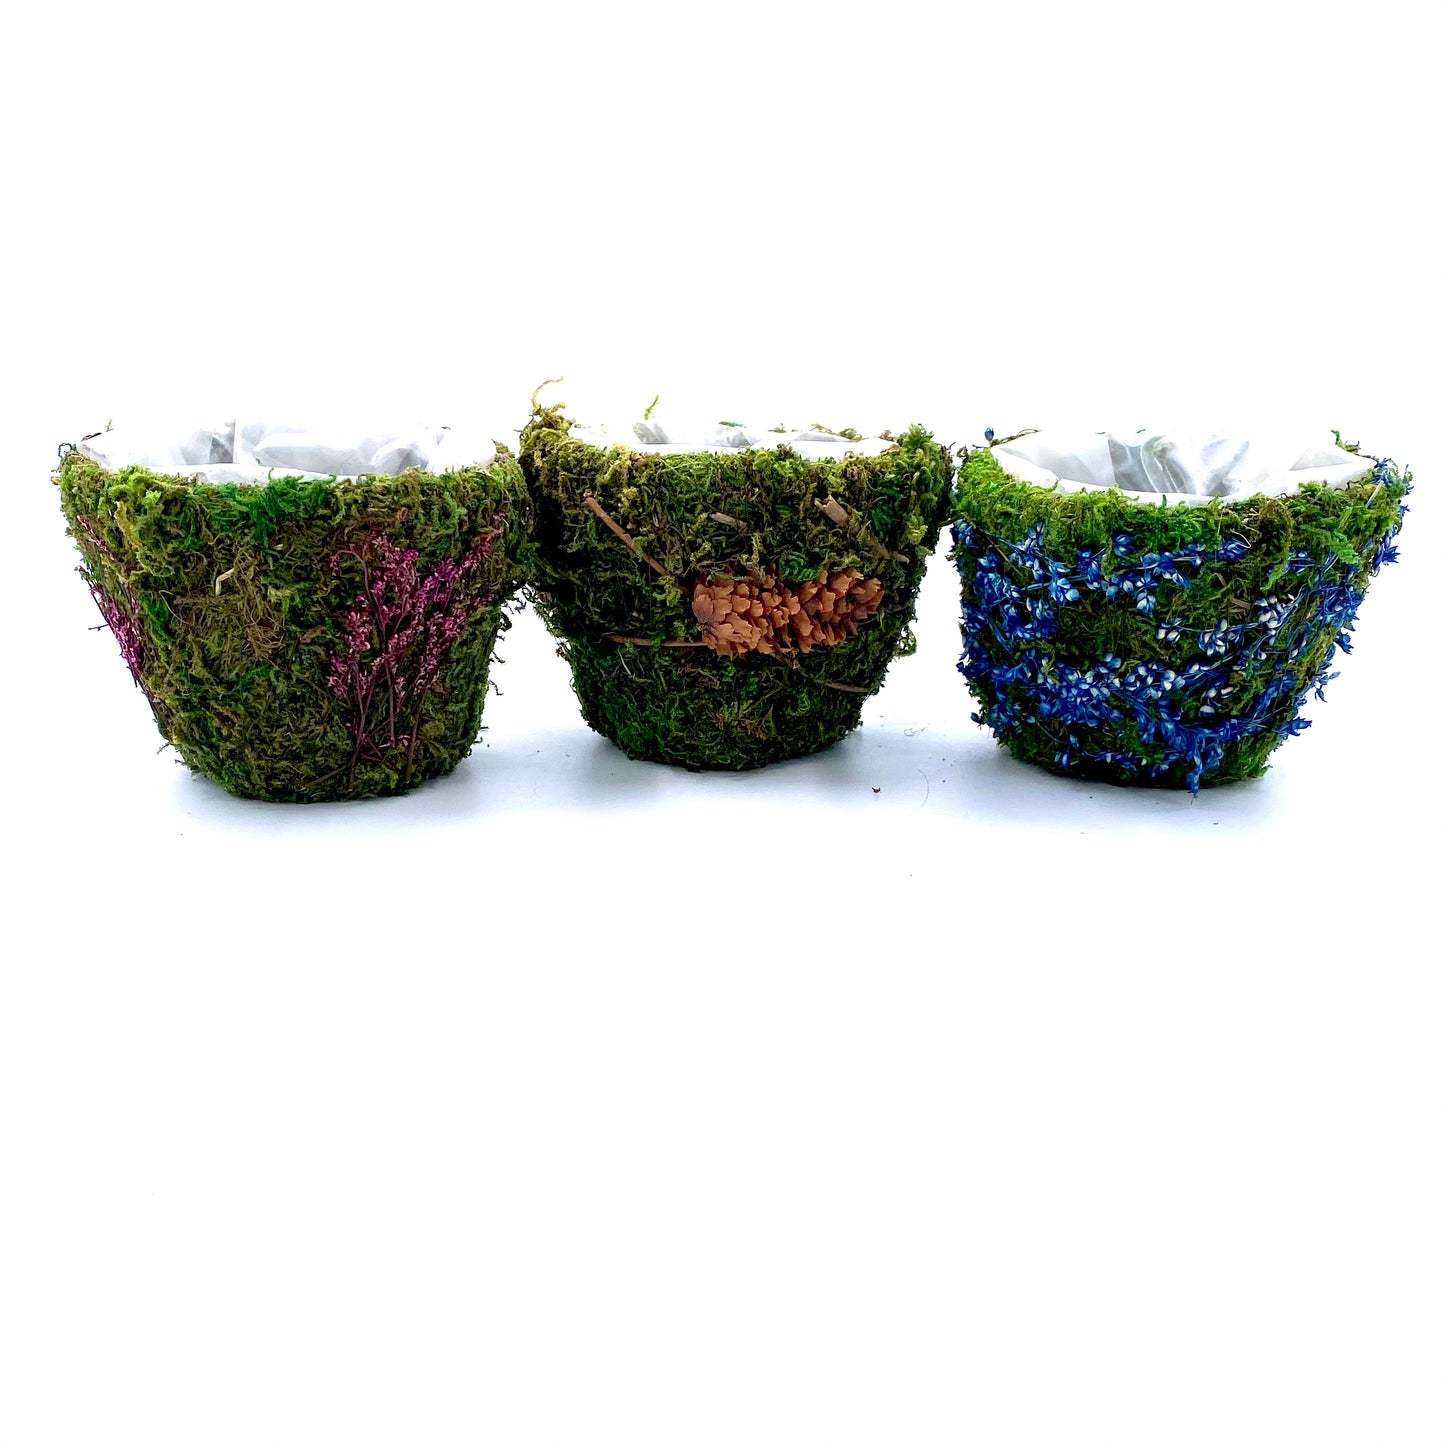 Mini Mossy Pots, Fairy Garden Product, Moss